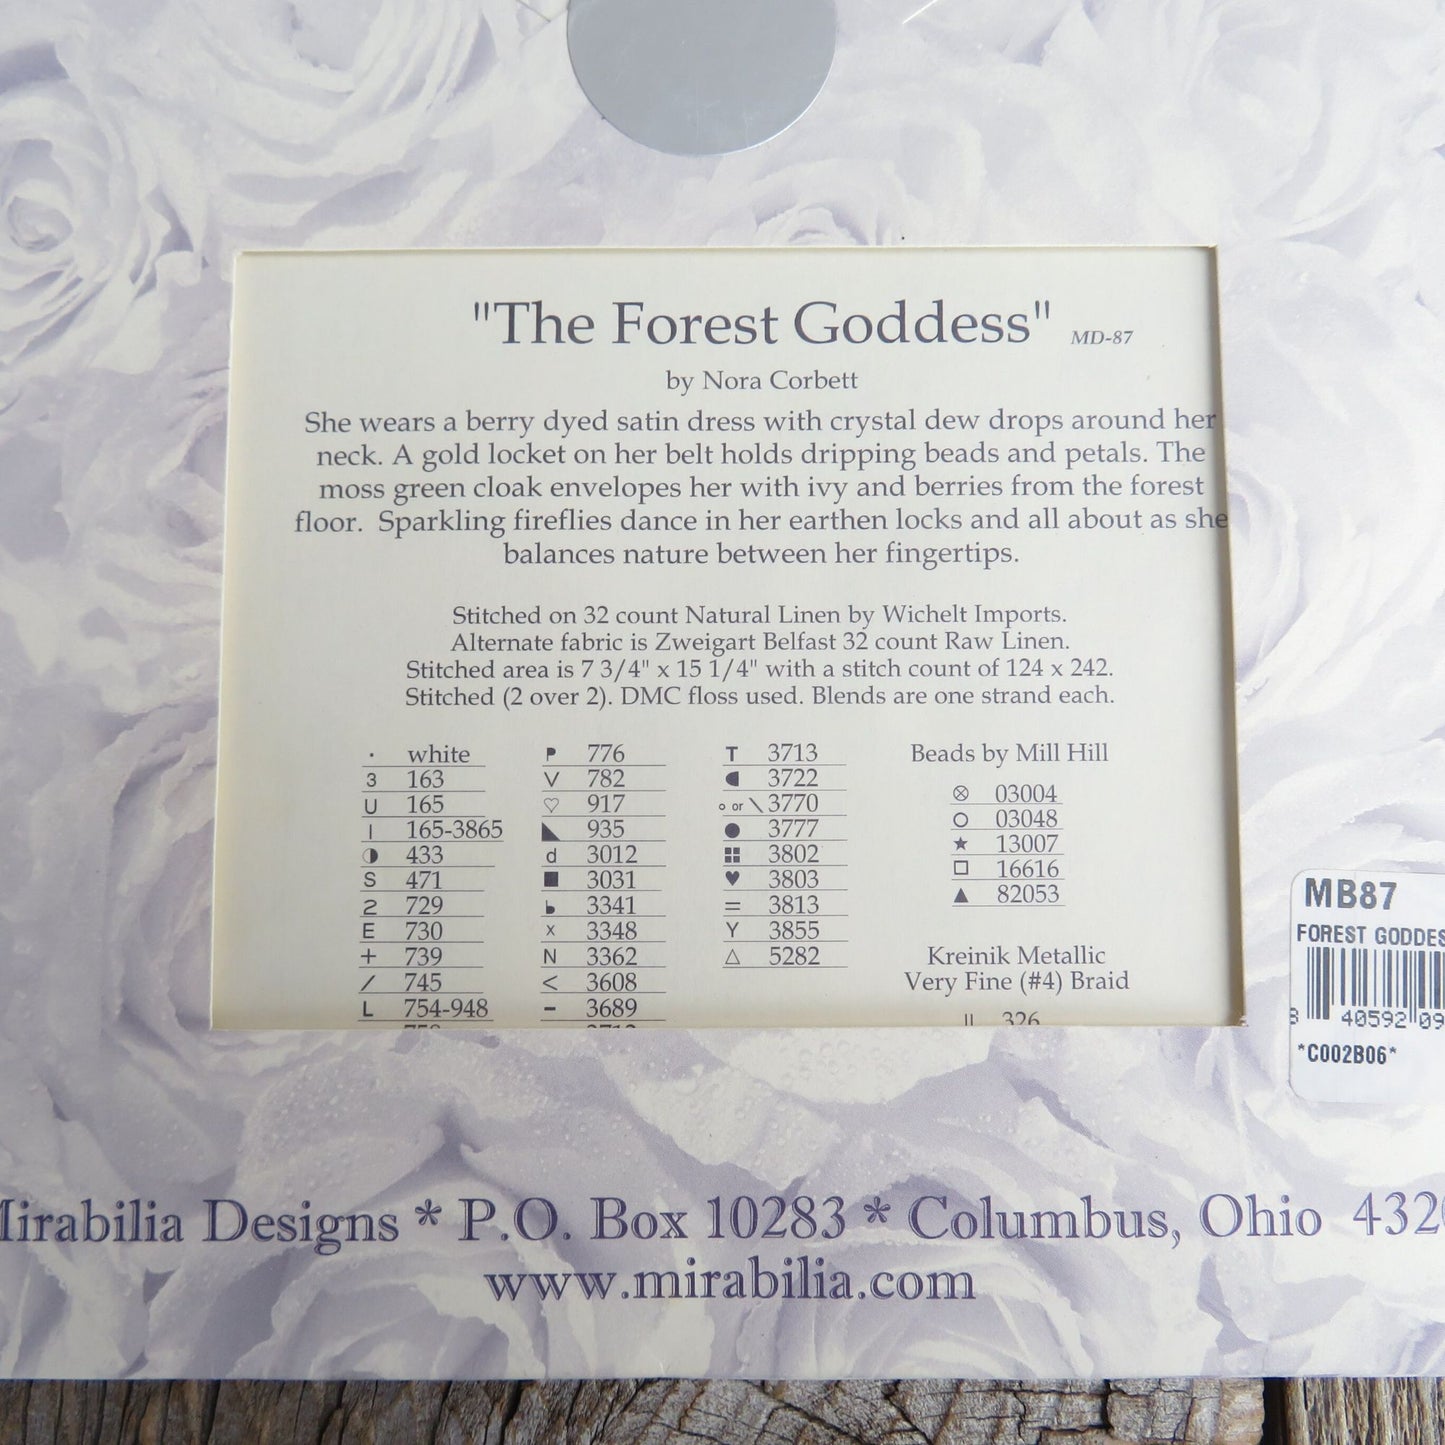 Mirabilia Counted Cross Stitch Pattern The Forest Goddess MD-87 Nora Corbett